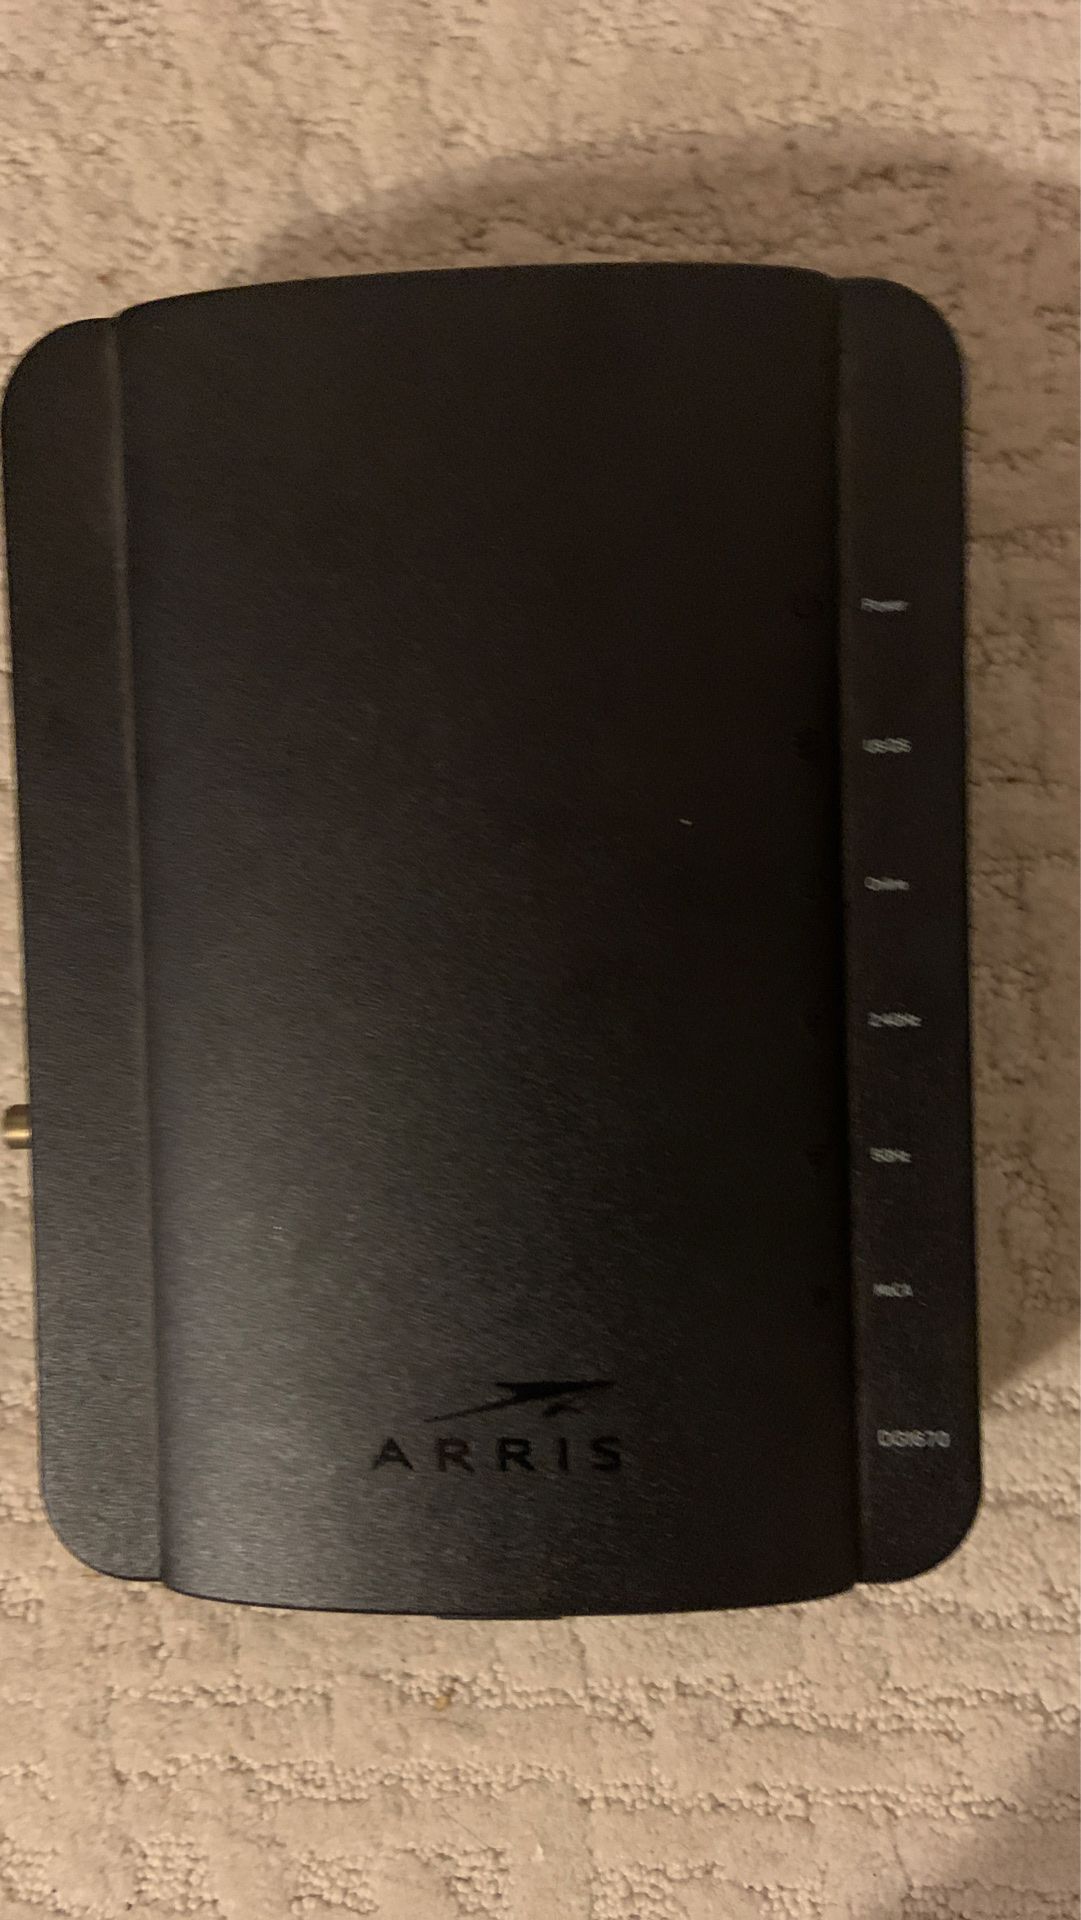 Arris DG1670A Wireless Router w/ Back Up Belkin Battery (Spectrum Cable)